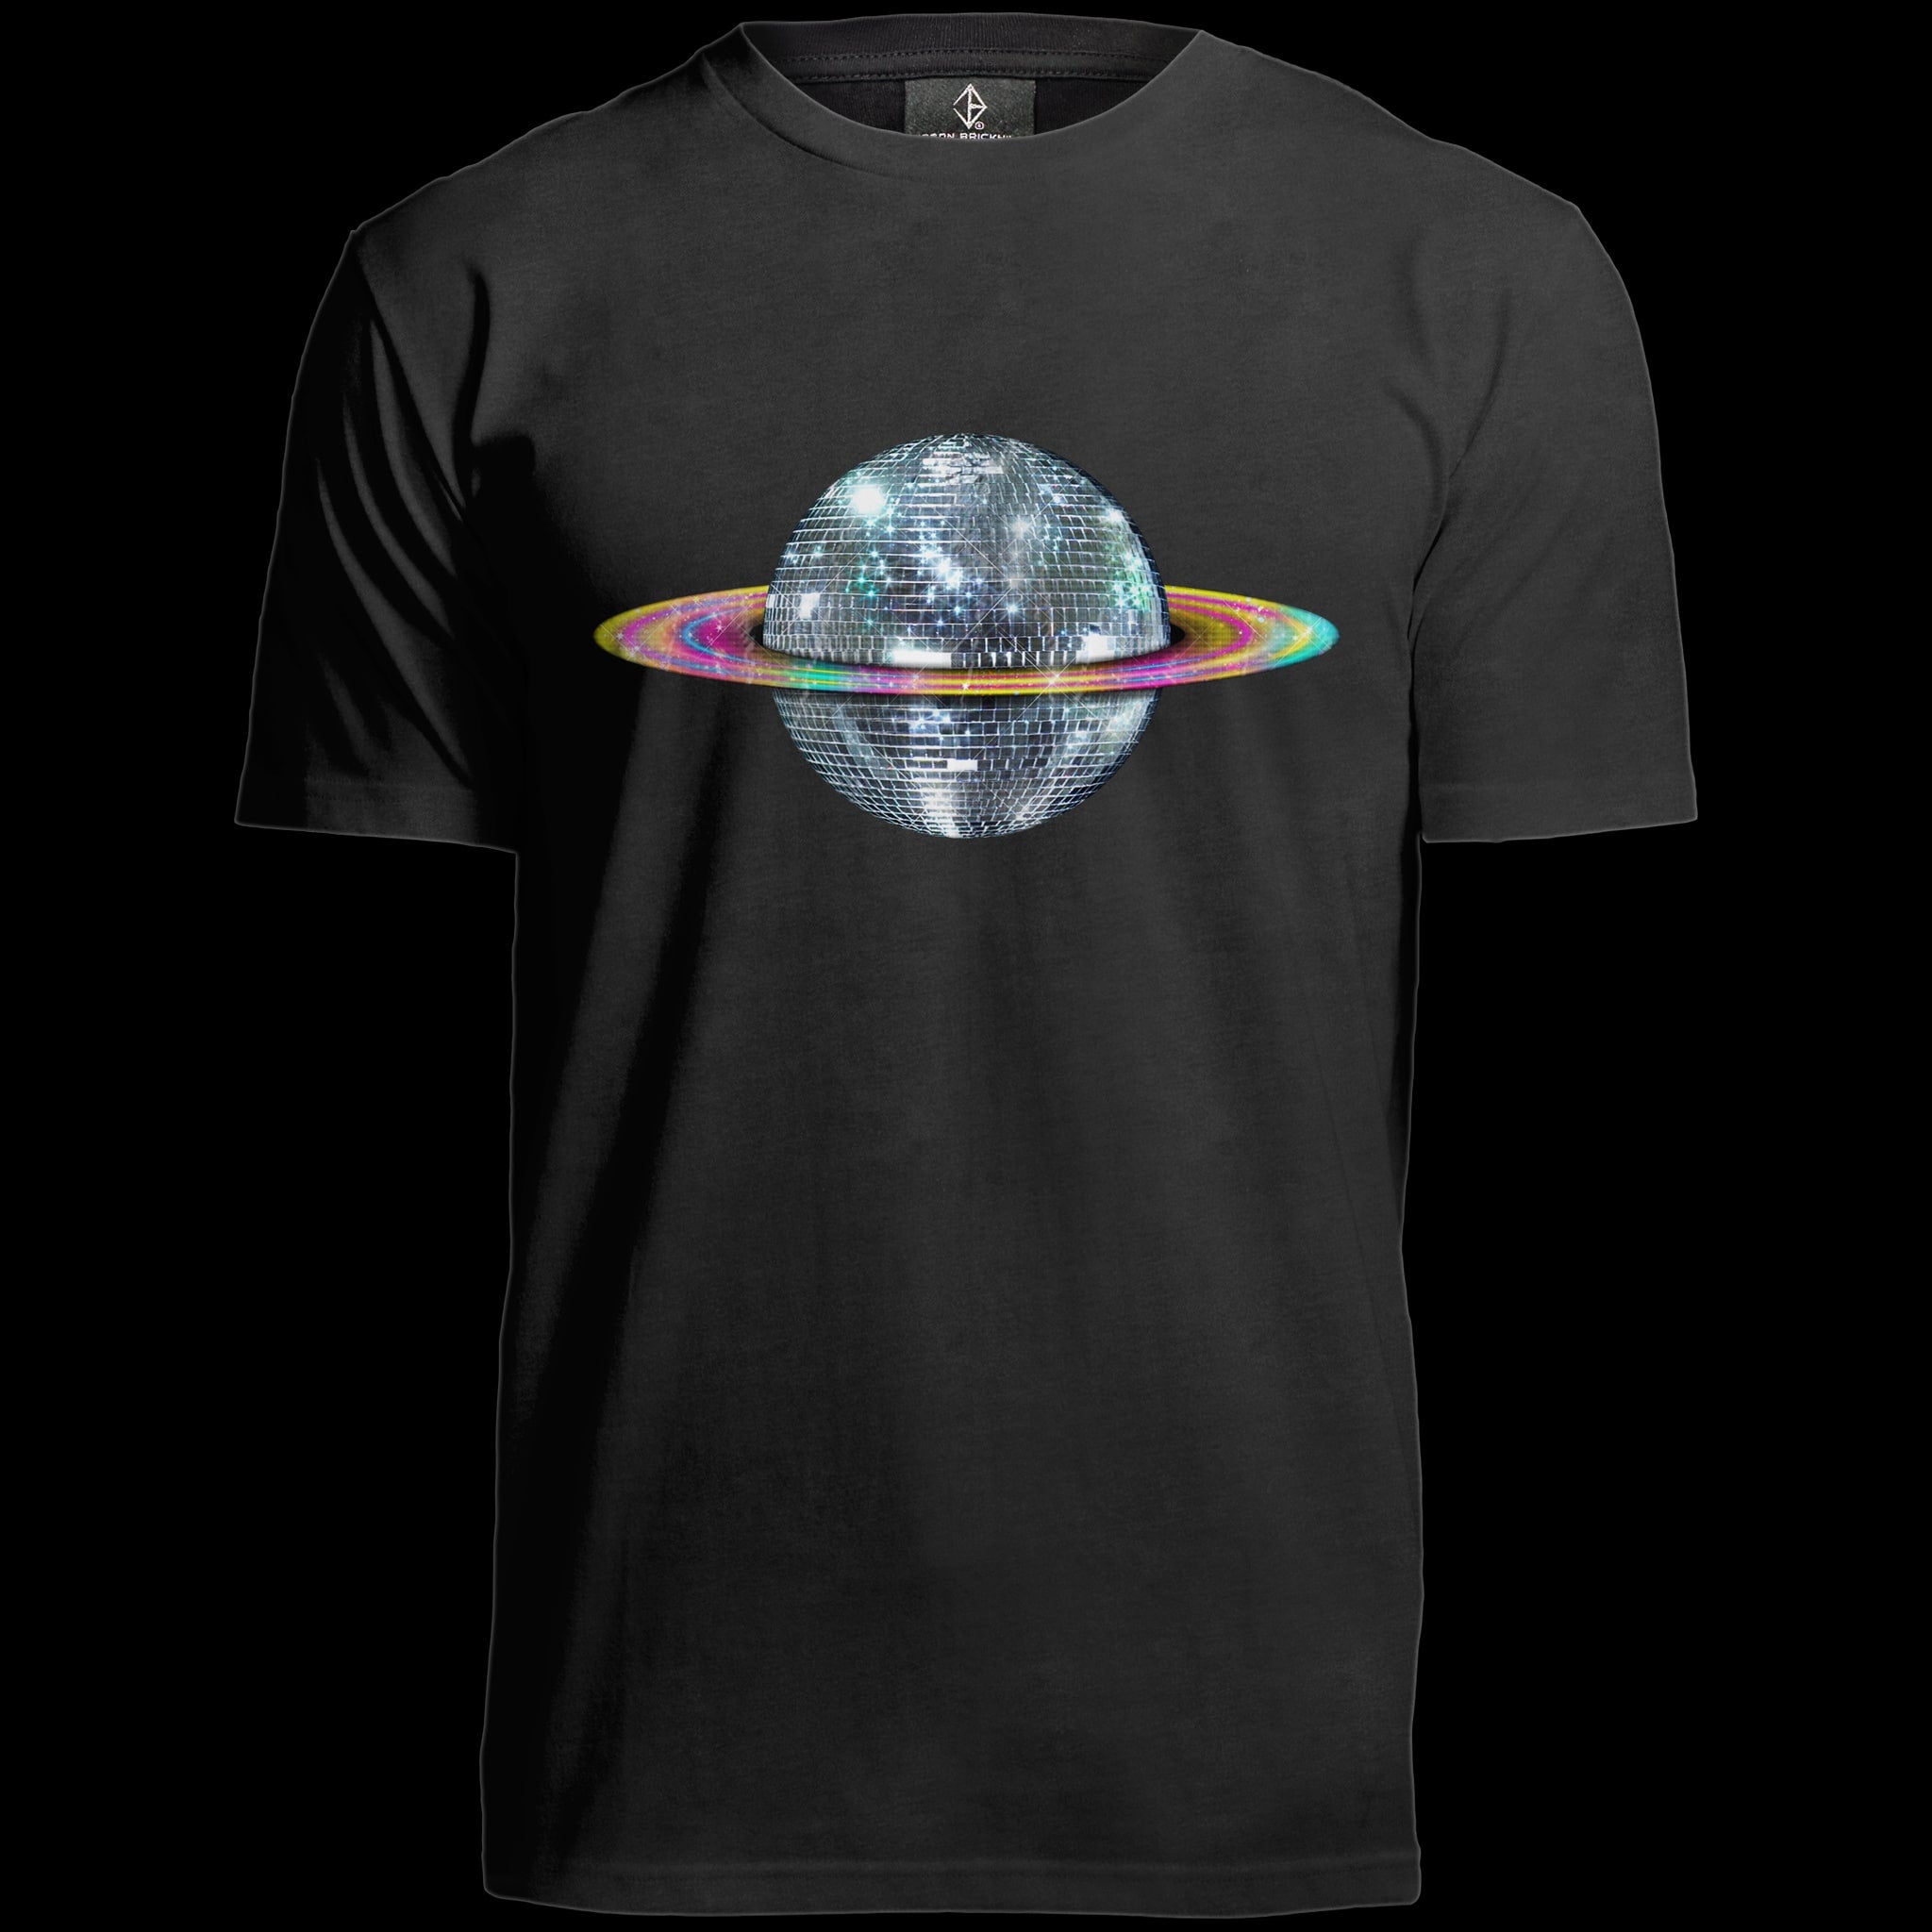 mirror ball planet t-shirt